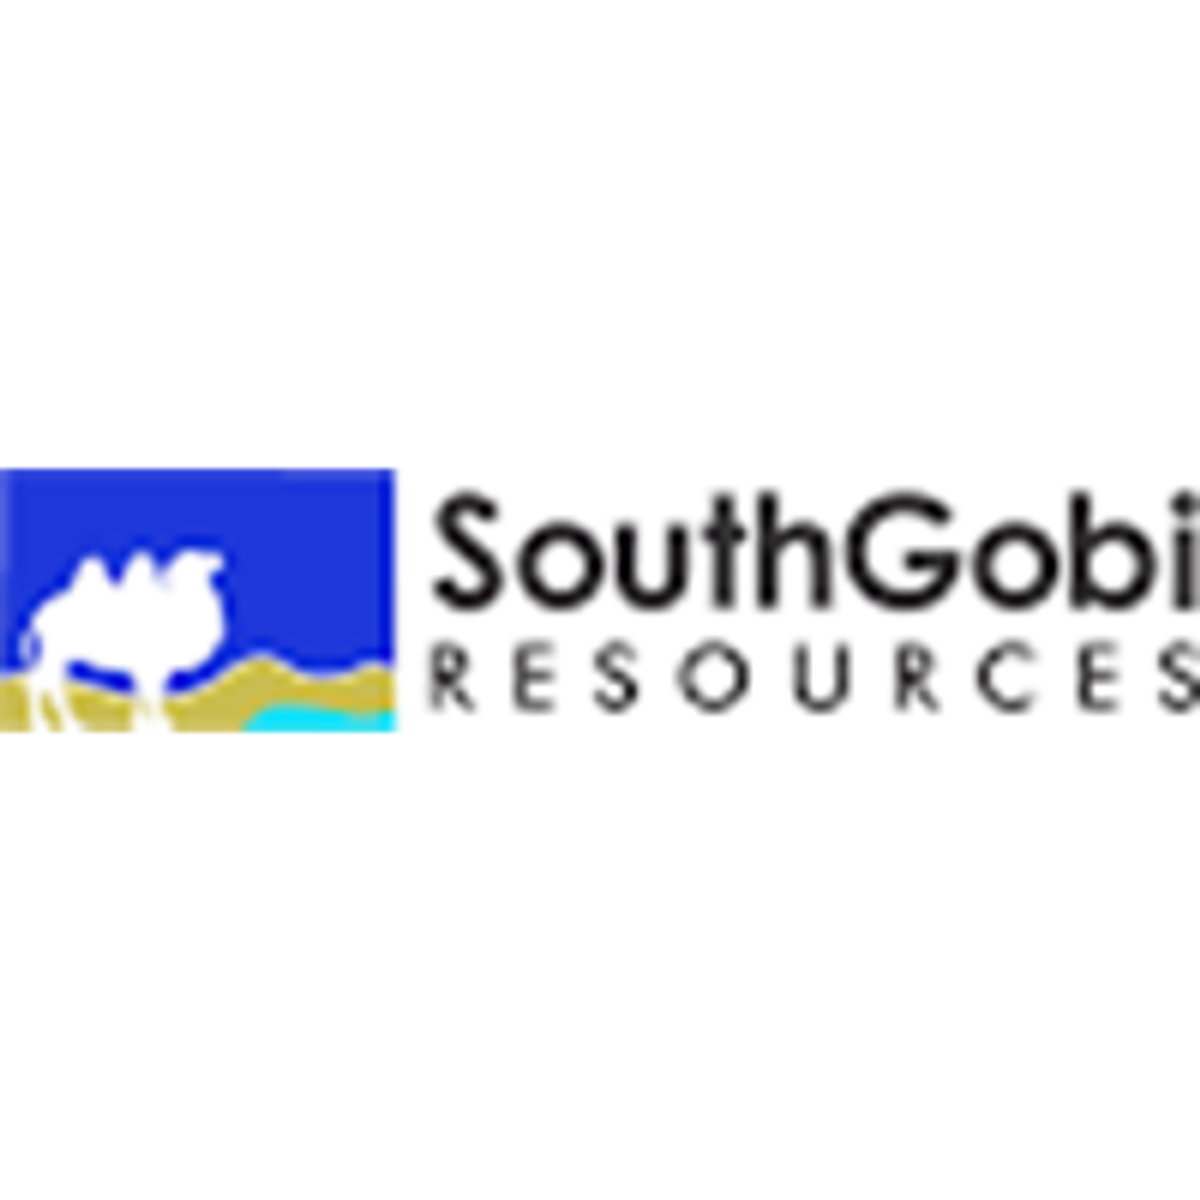 SouthGobi Announces Resignation Of Vice President of Sales